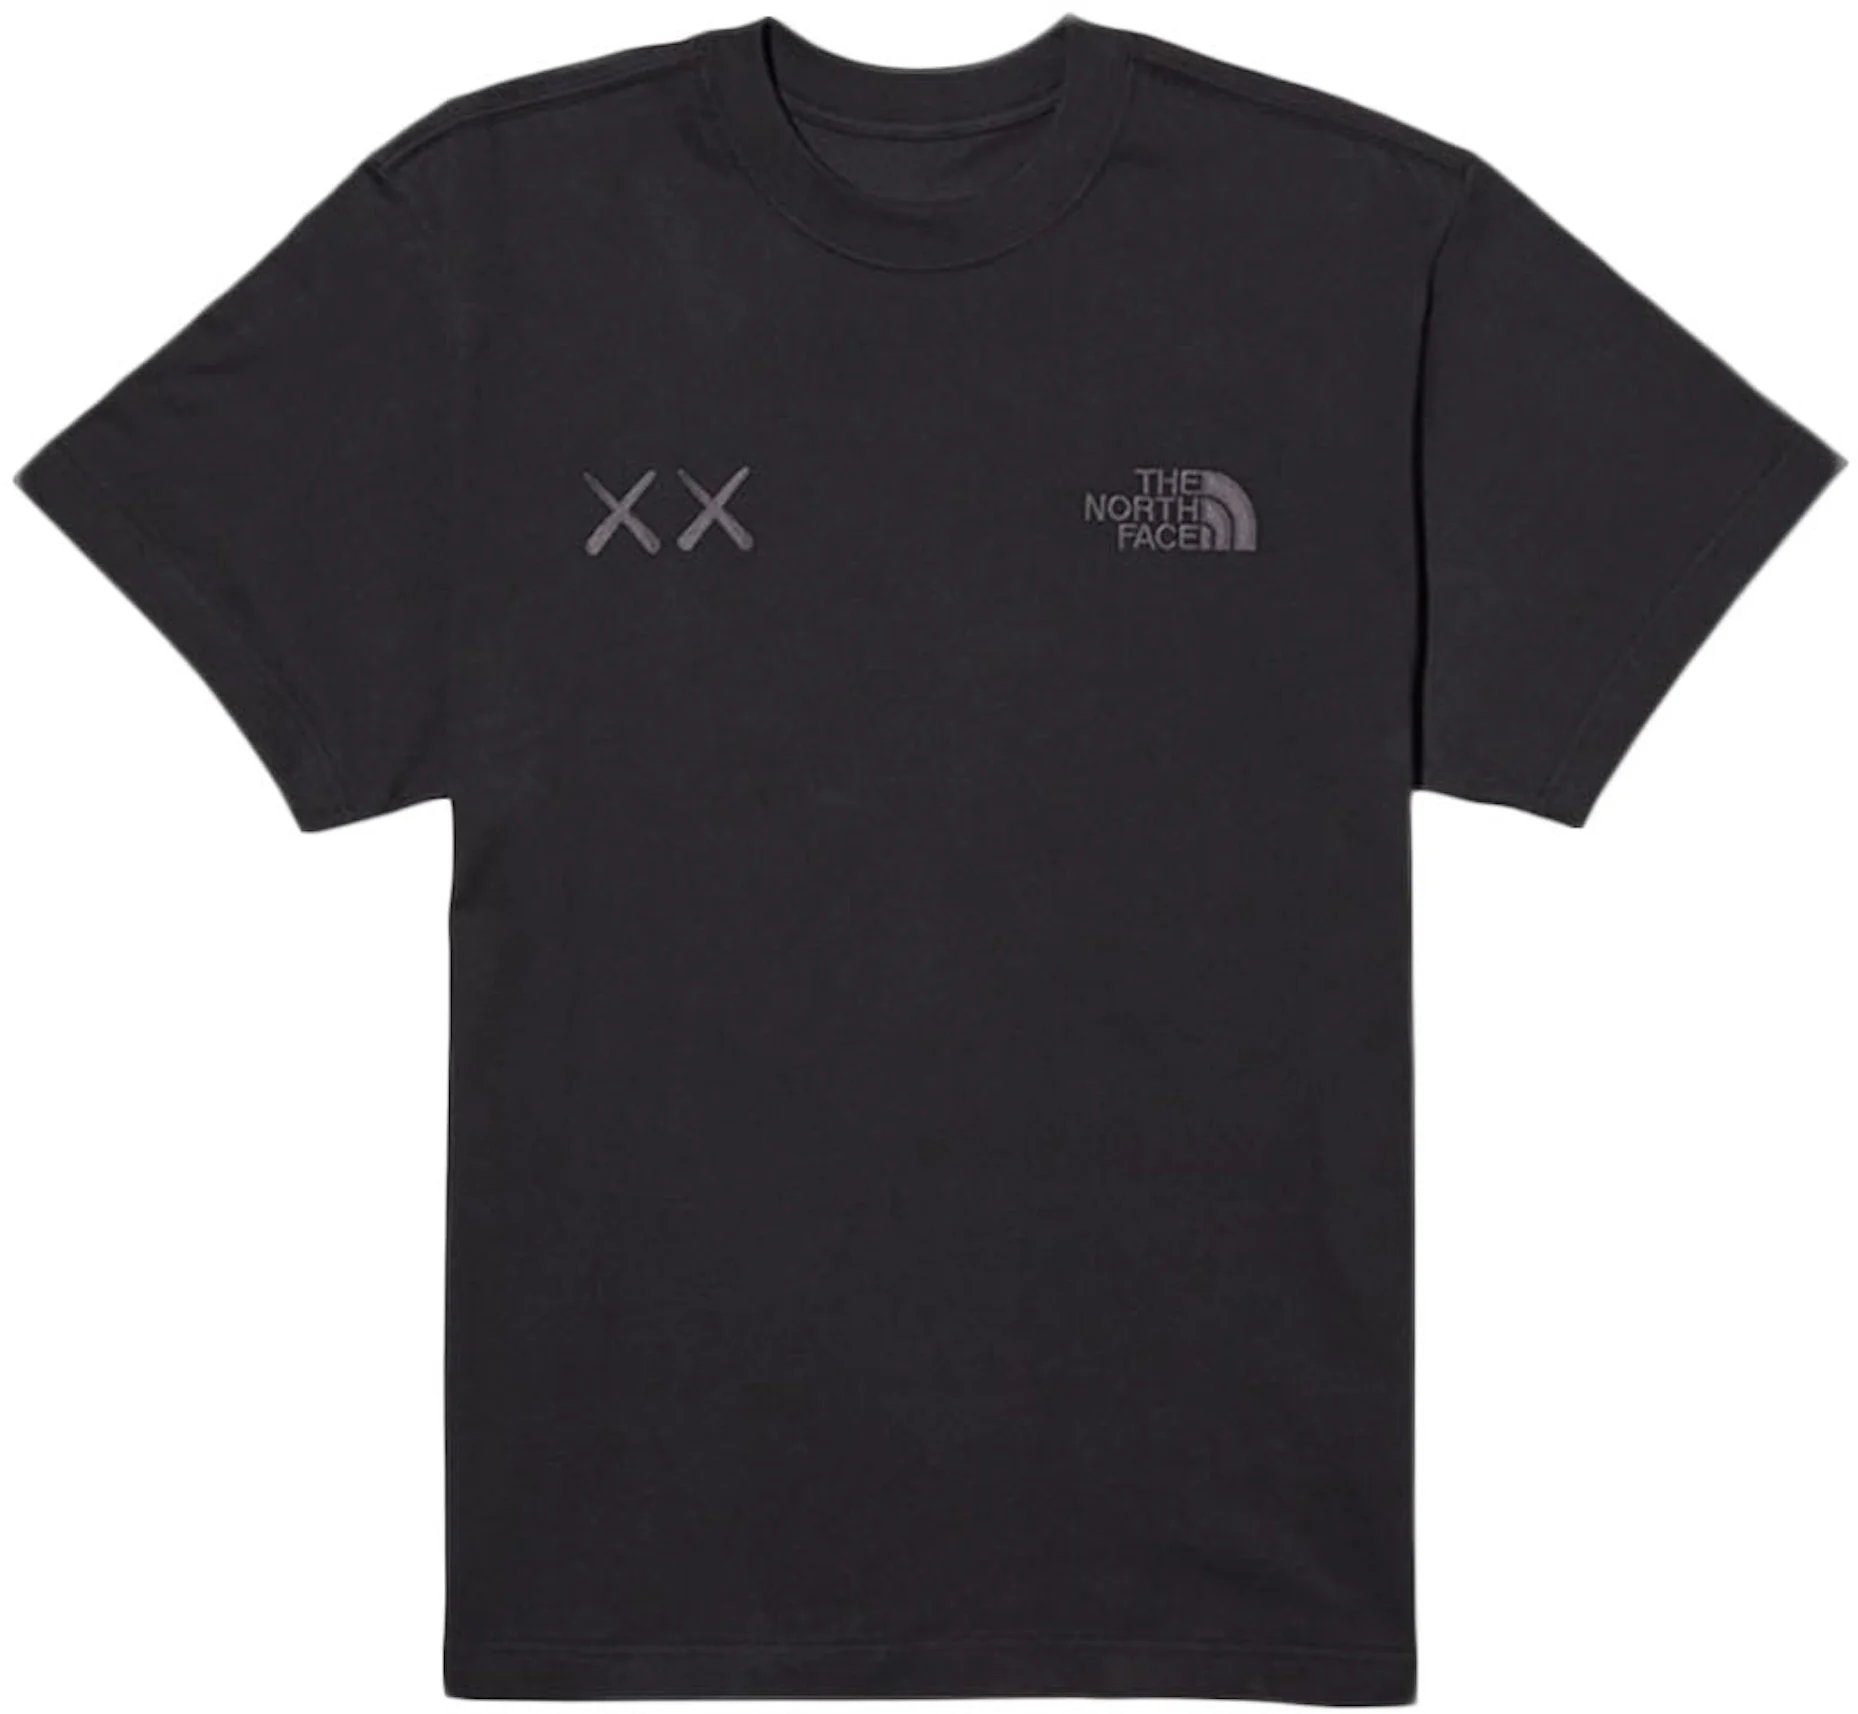 Kaws x The North Face T-Shirt Black